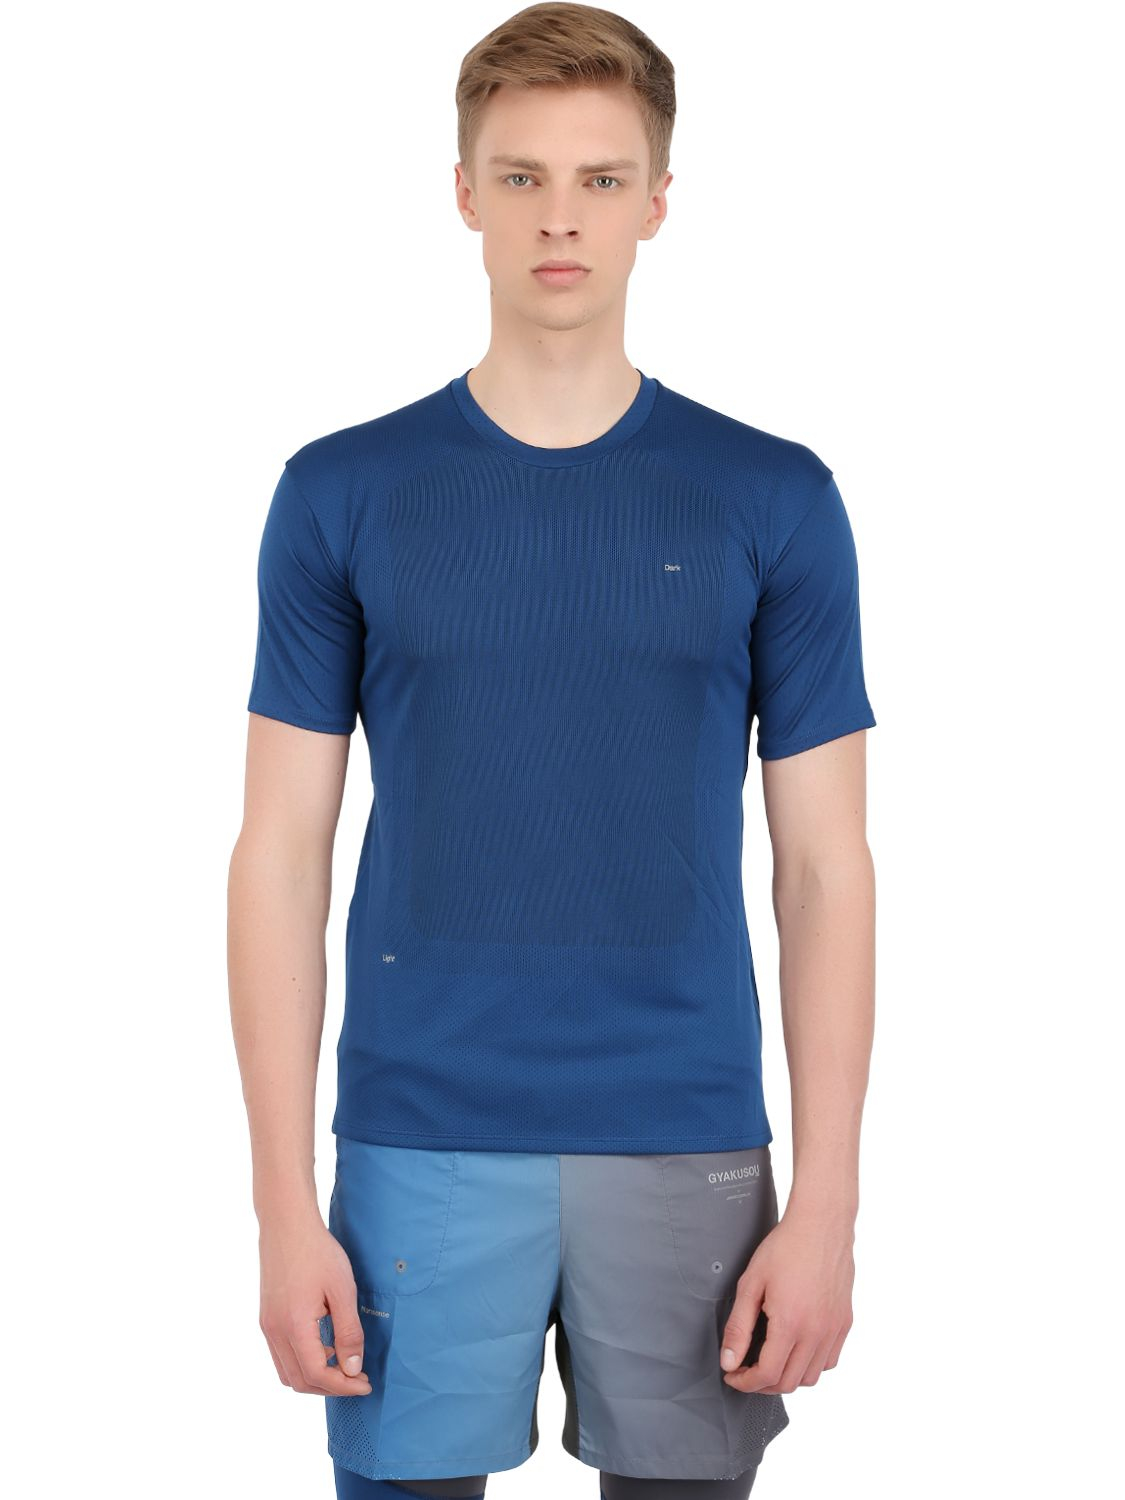 Lyst - Nike Drifit Sweat Map Running Tshirt in Blue for Men